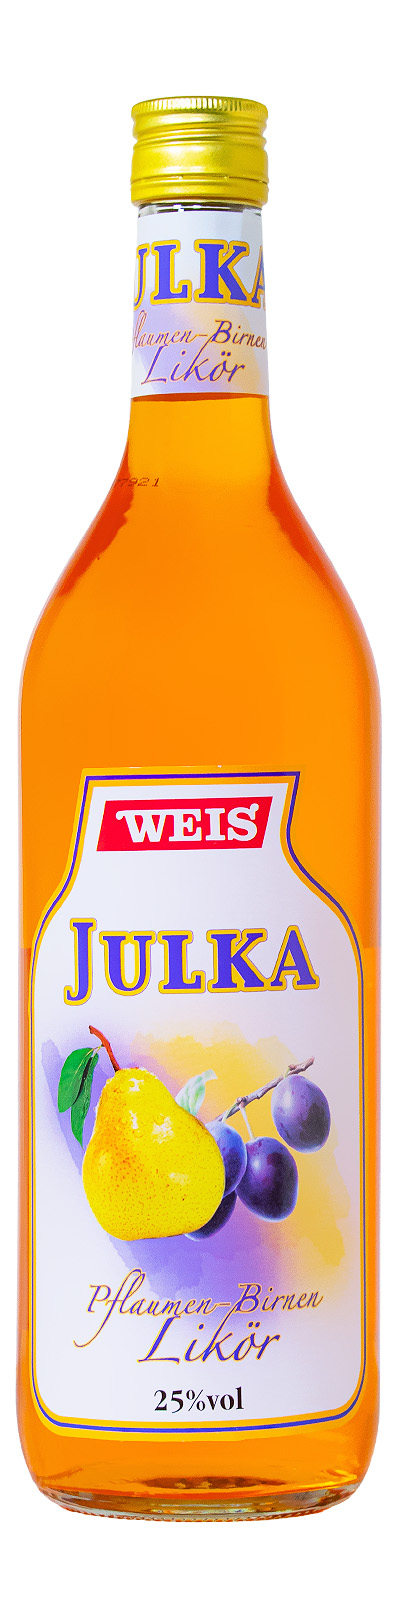 Weis Julka Pflaumen-Birnen-Likör - 1 Liter 25% vol